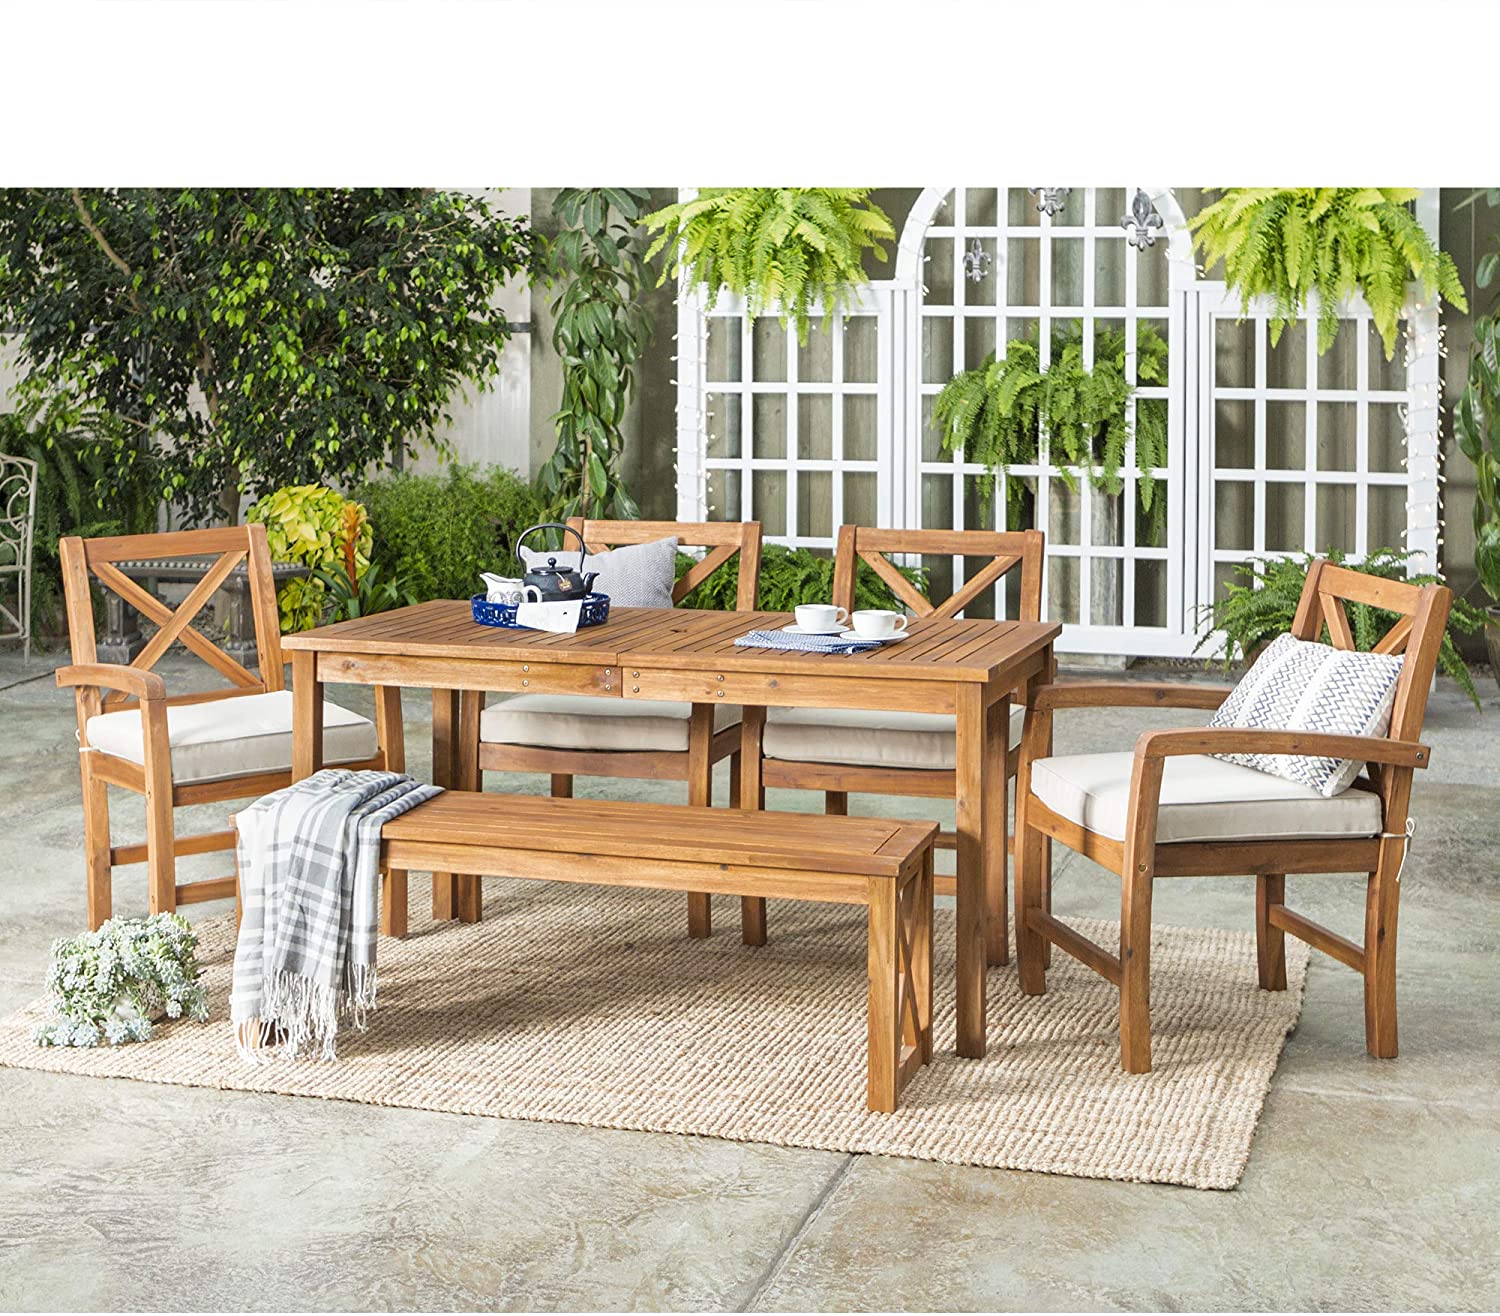 Outdoor Furniture: Creating A Relaxing Patio Or Garden Oasis